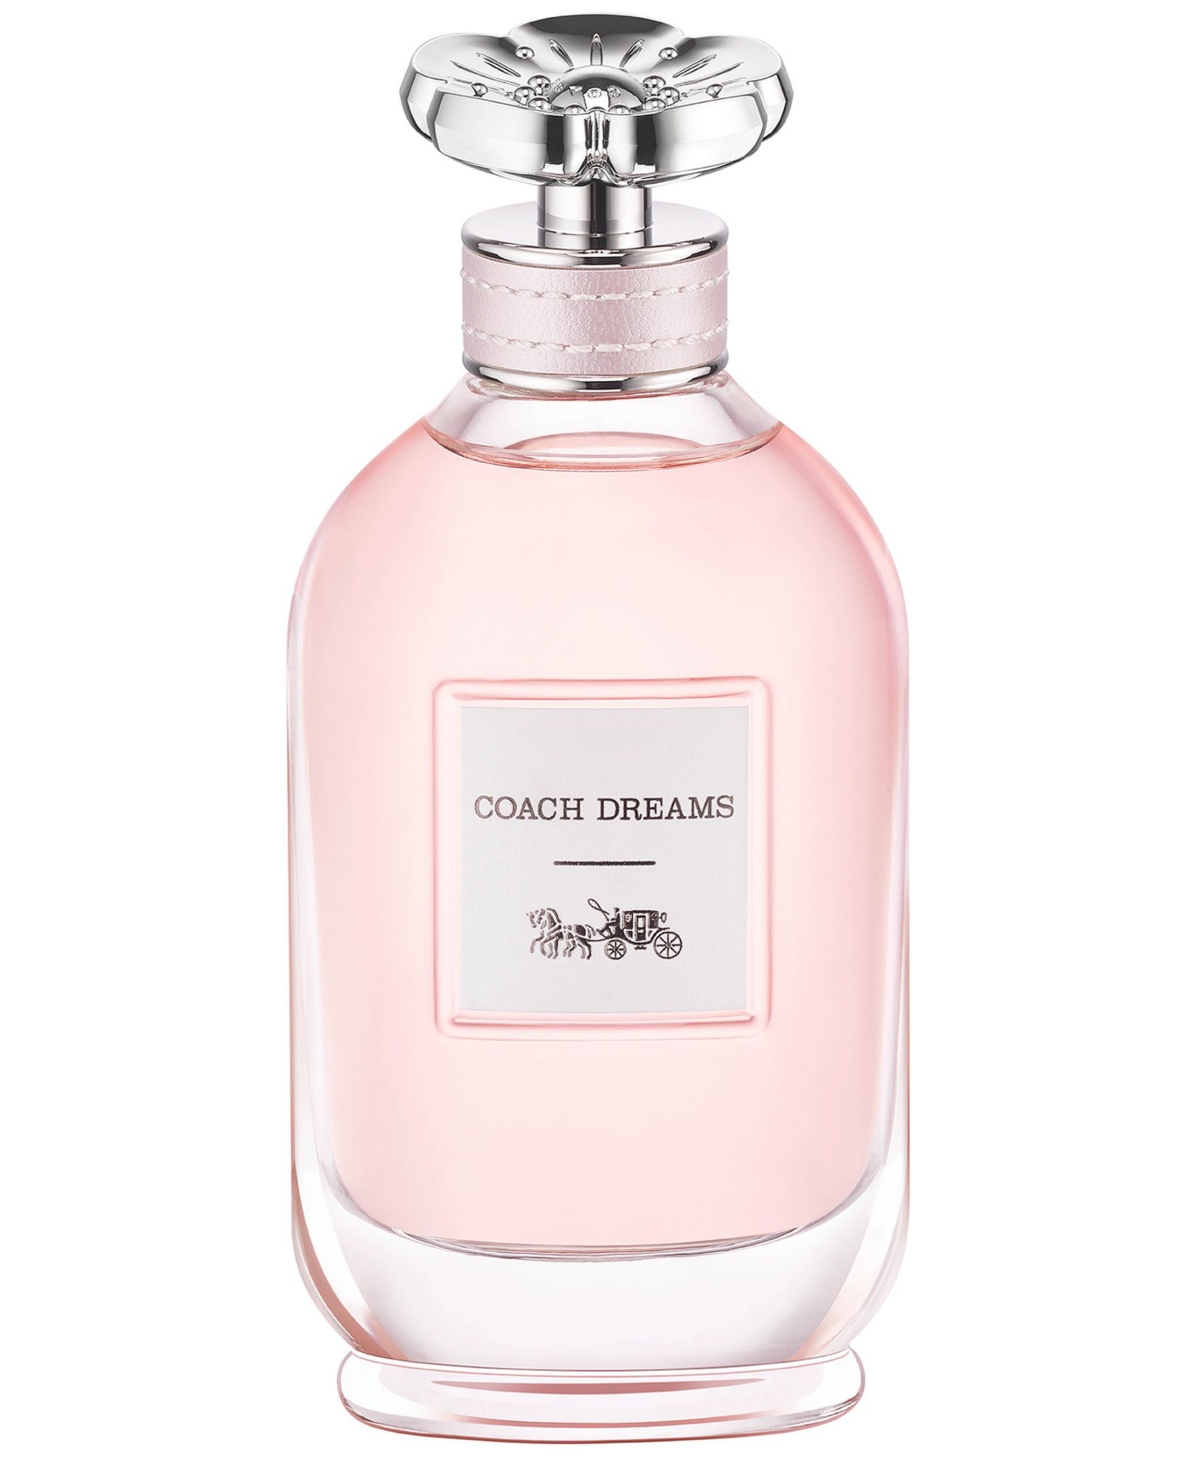 COACH Dreams Eau de Parfum Spray,  & Reviews - Perfume - Beauty -  Macy's